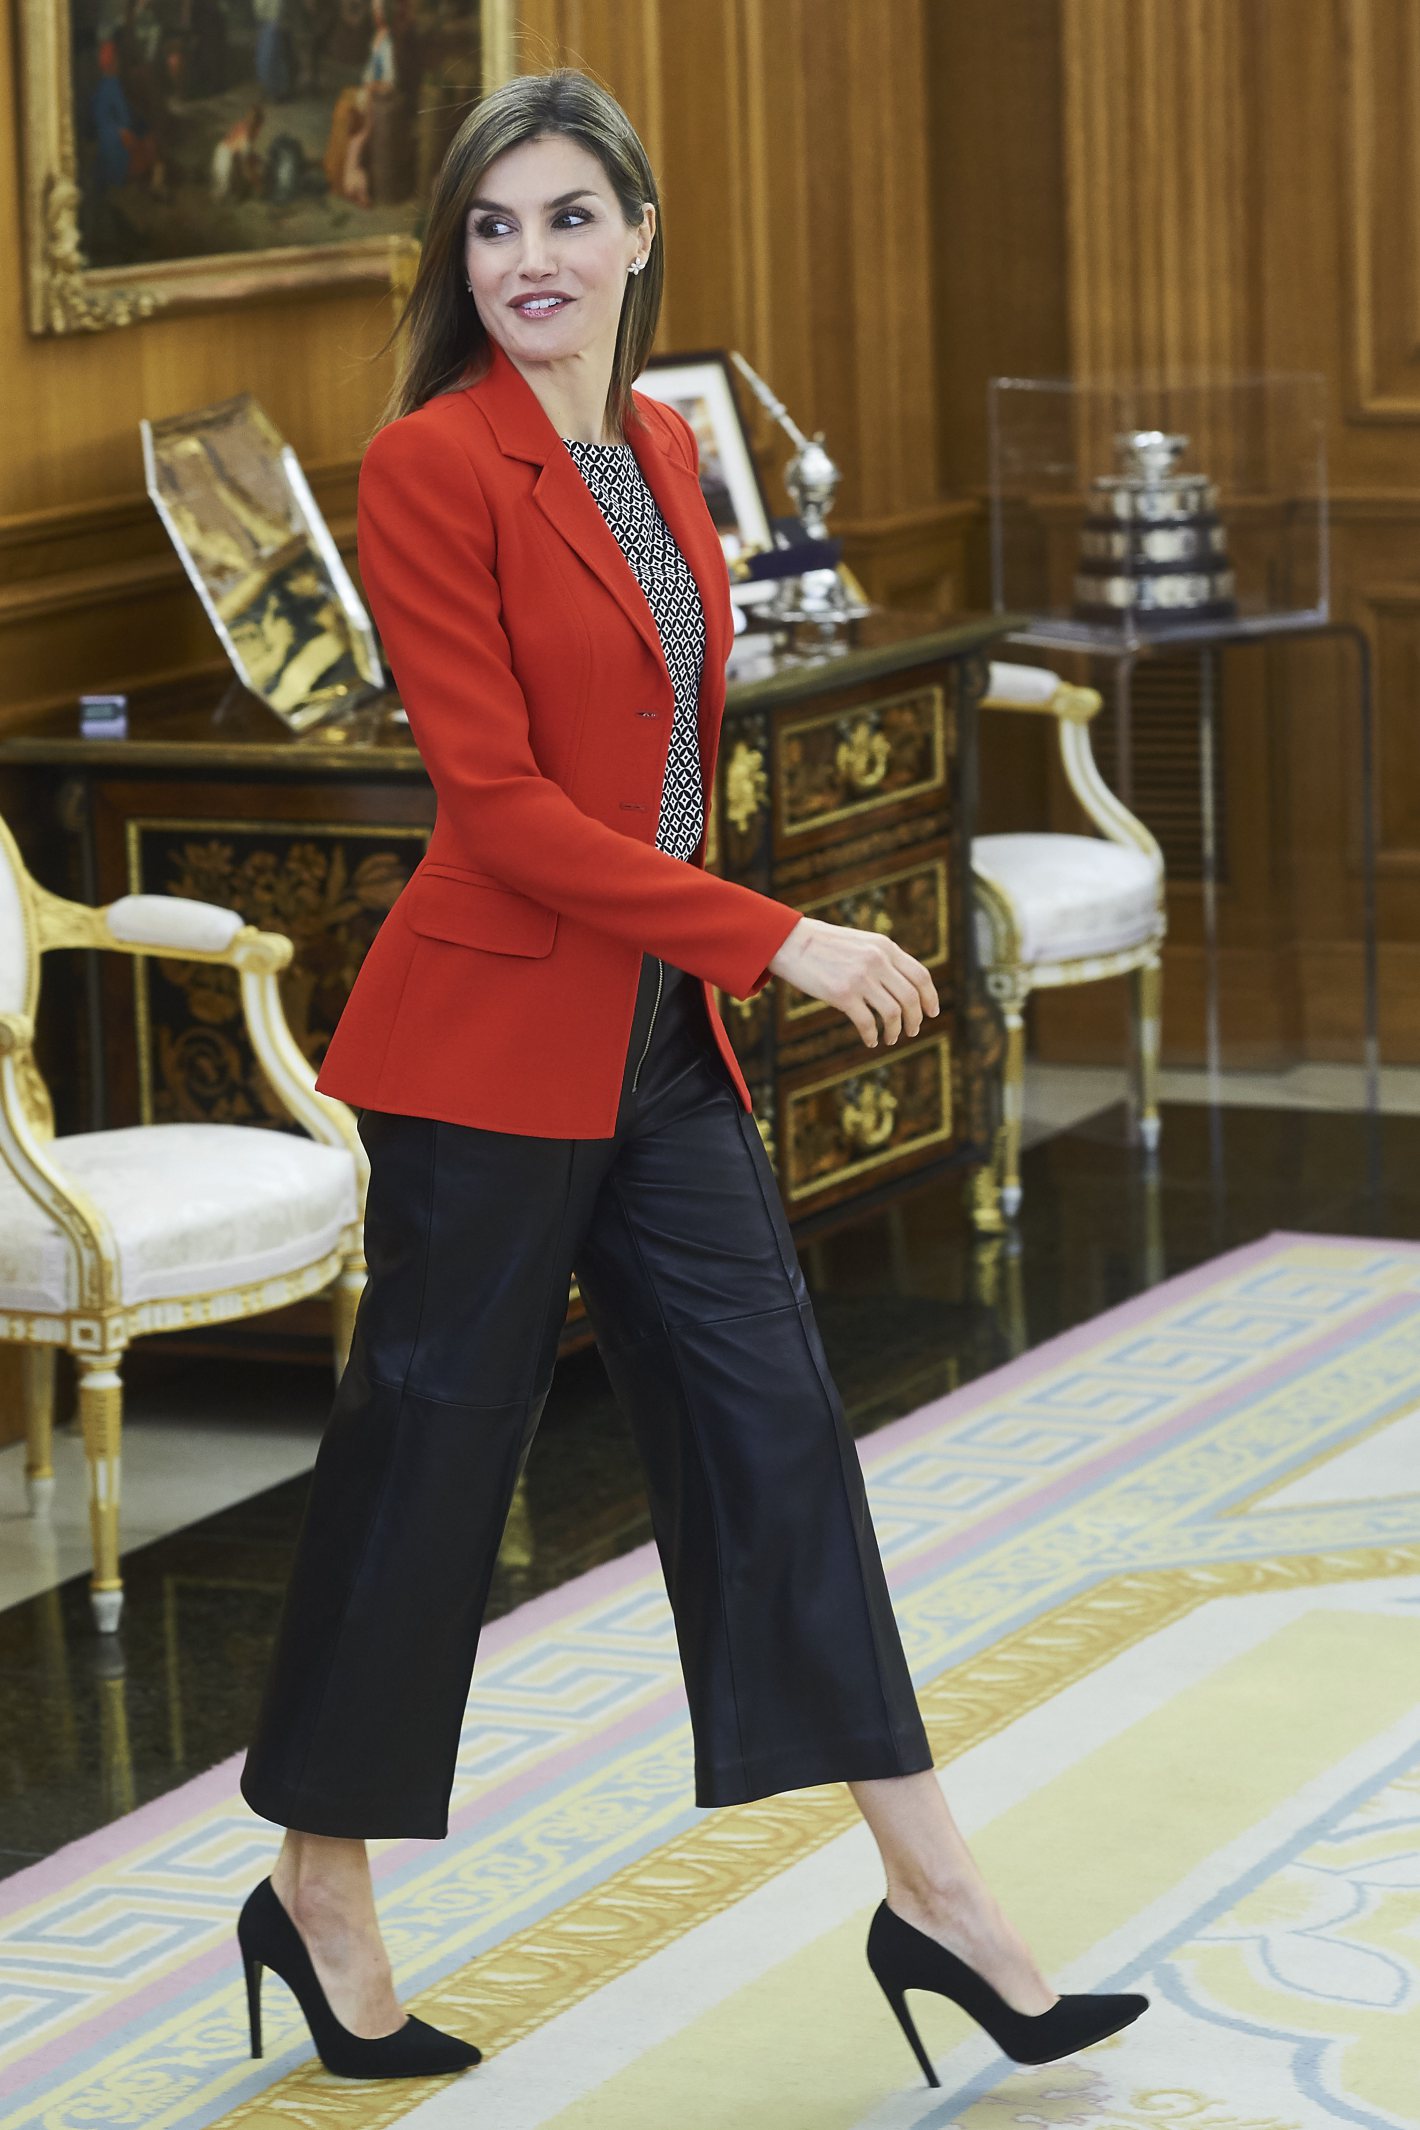 Mandatory Credit: Photo by REX/Shutterstock (5636277p) Queen Letizia An audience with Queen Letizia, Zarzuela Palace, Madrid, Spain - 13 Apr 2016